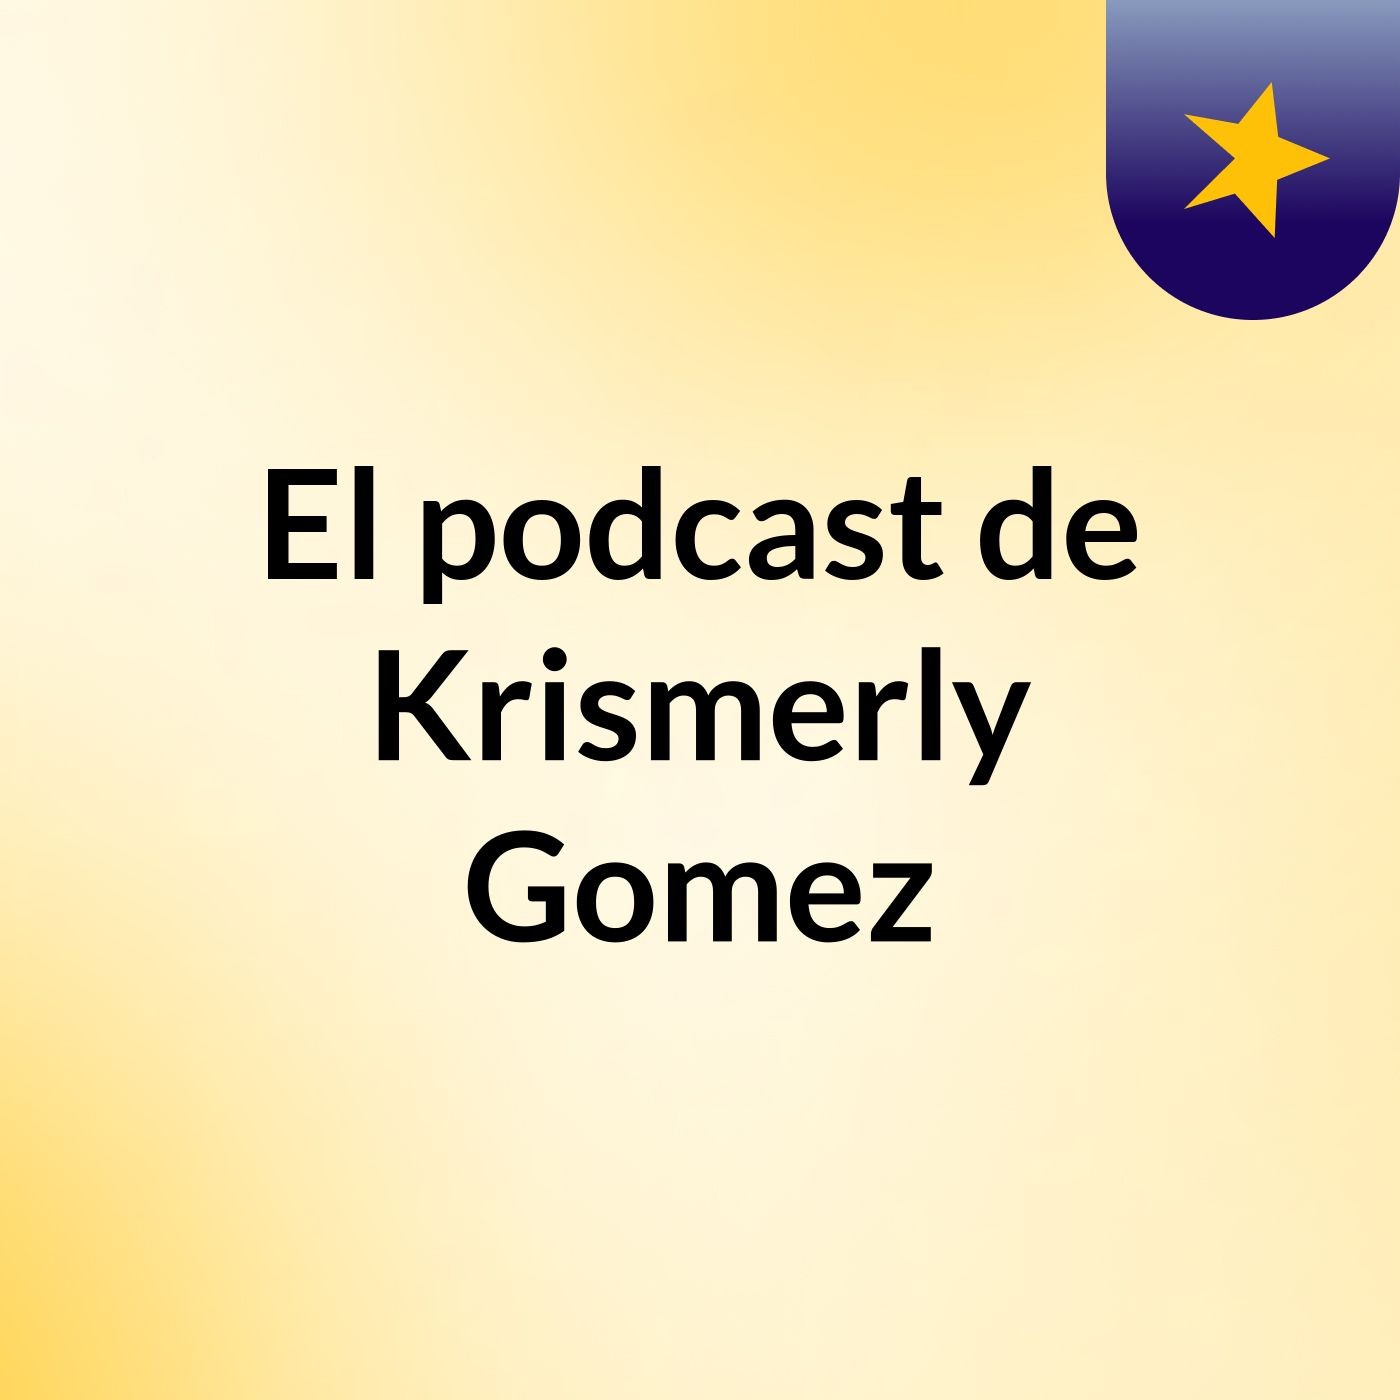 El podcast de Krismerly Gomez